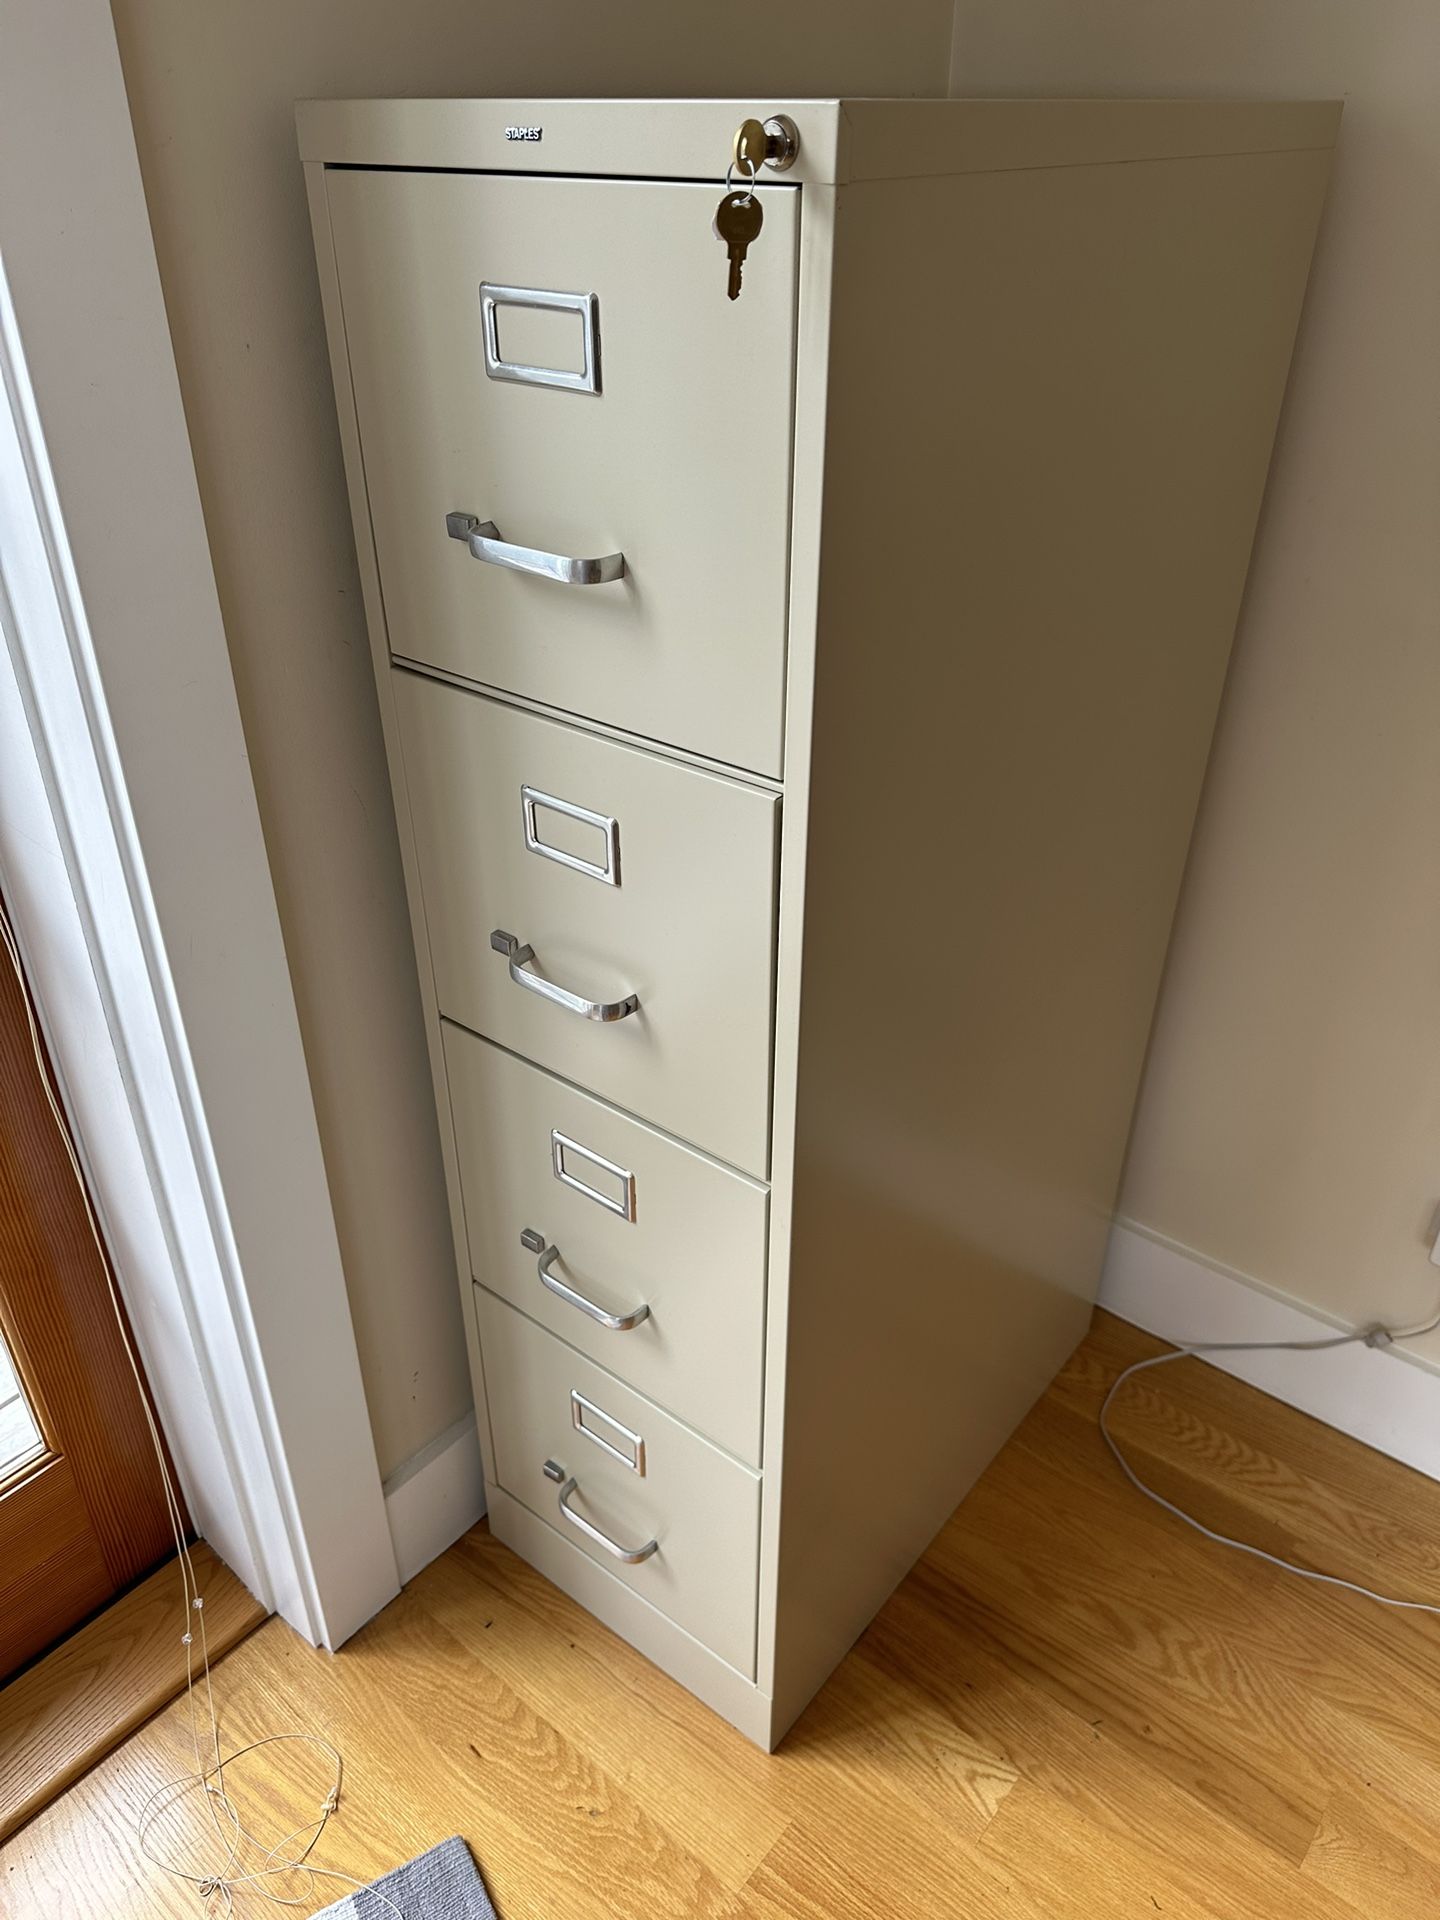 4 drawer lockable Staples  metal filing cabinet - like brand new!